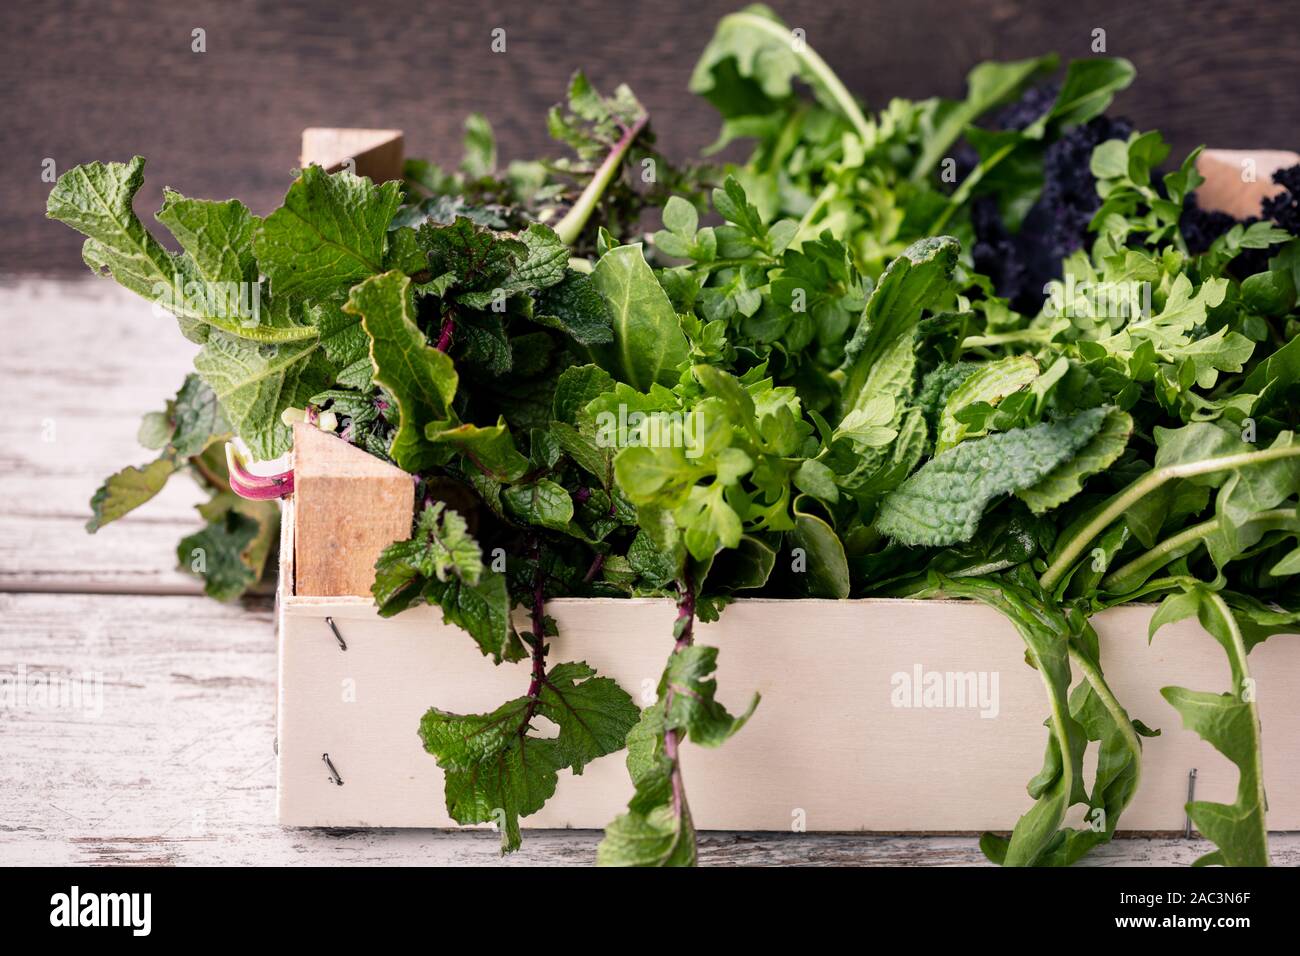 wild edible spontaneous herbs in a crate Stock Photo